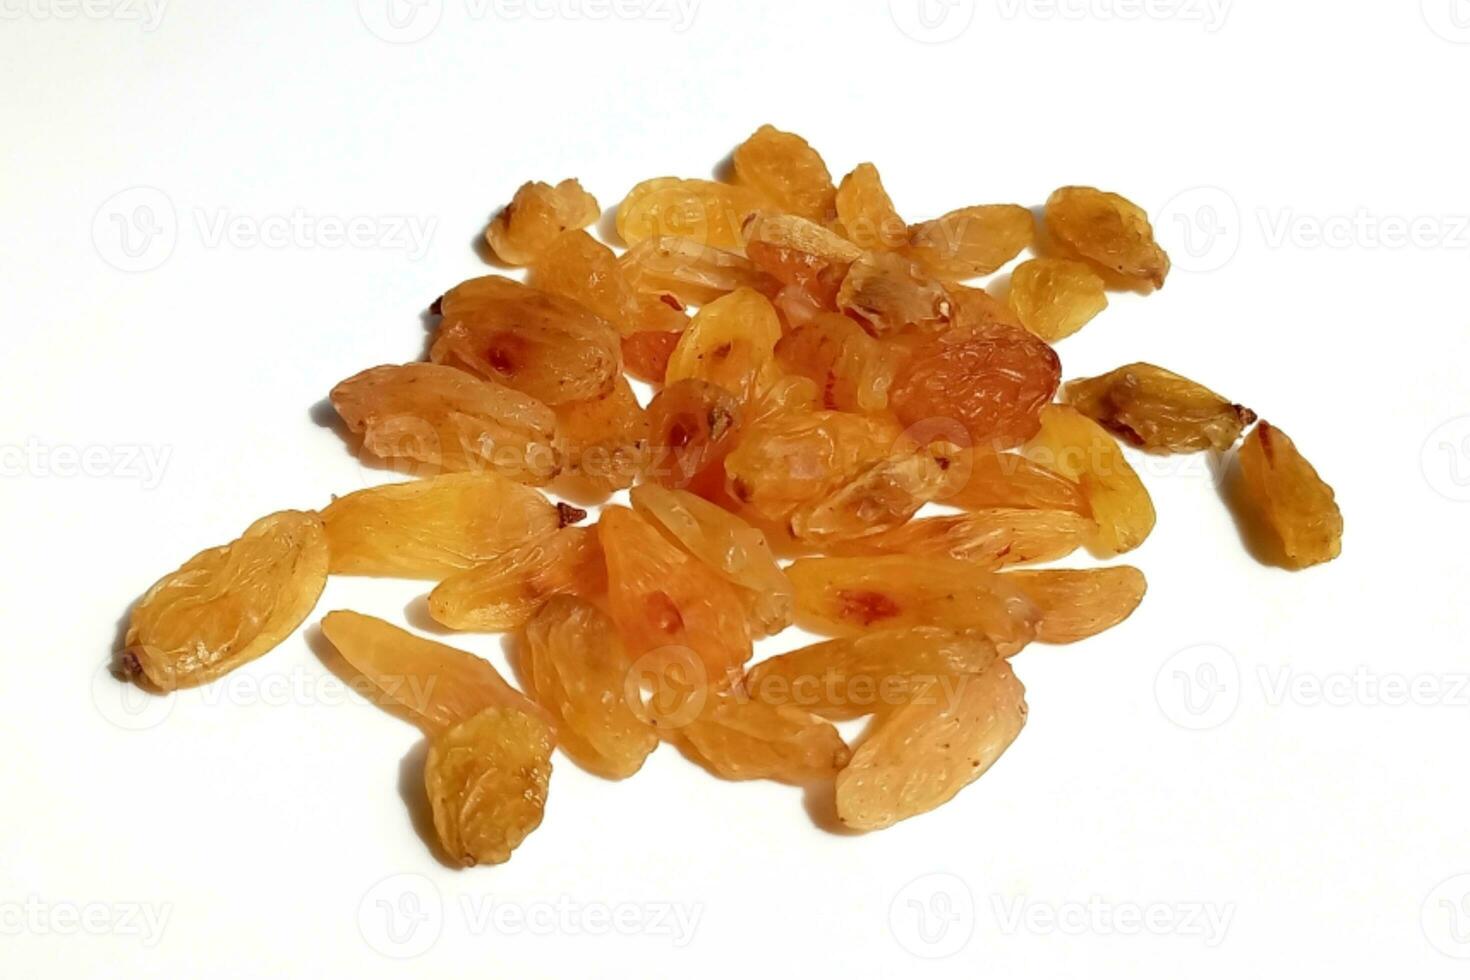 Yellow raisins isolated on white background photo